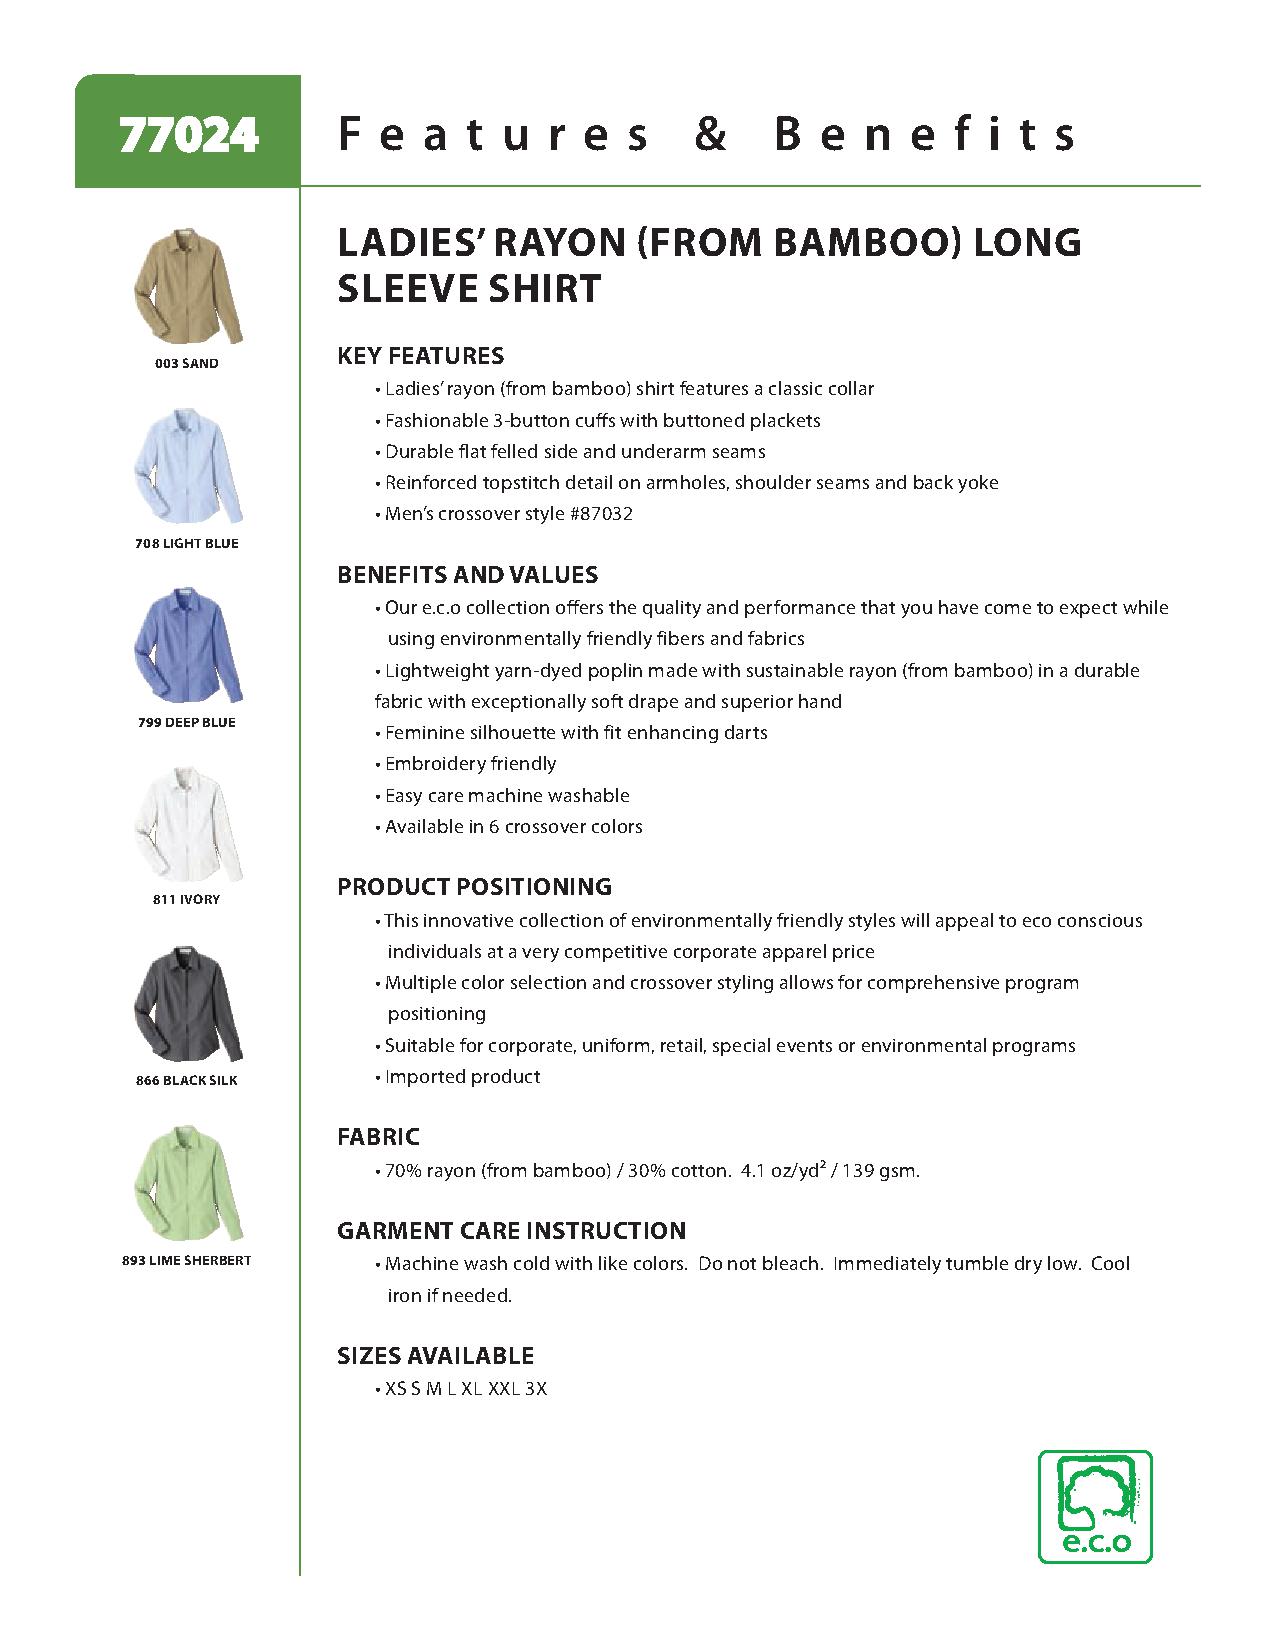 Ash City e.c.o Wovens 77024 - Ladies' Rayon (from Bamboo) Long Sleeve Shirt